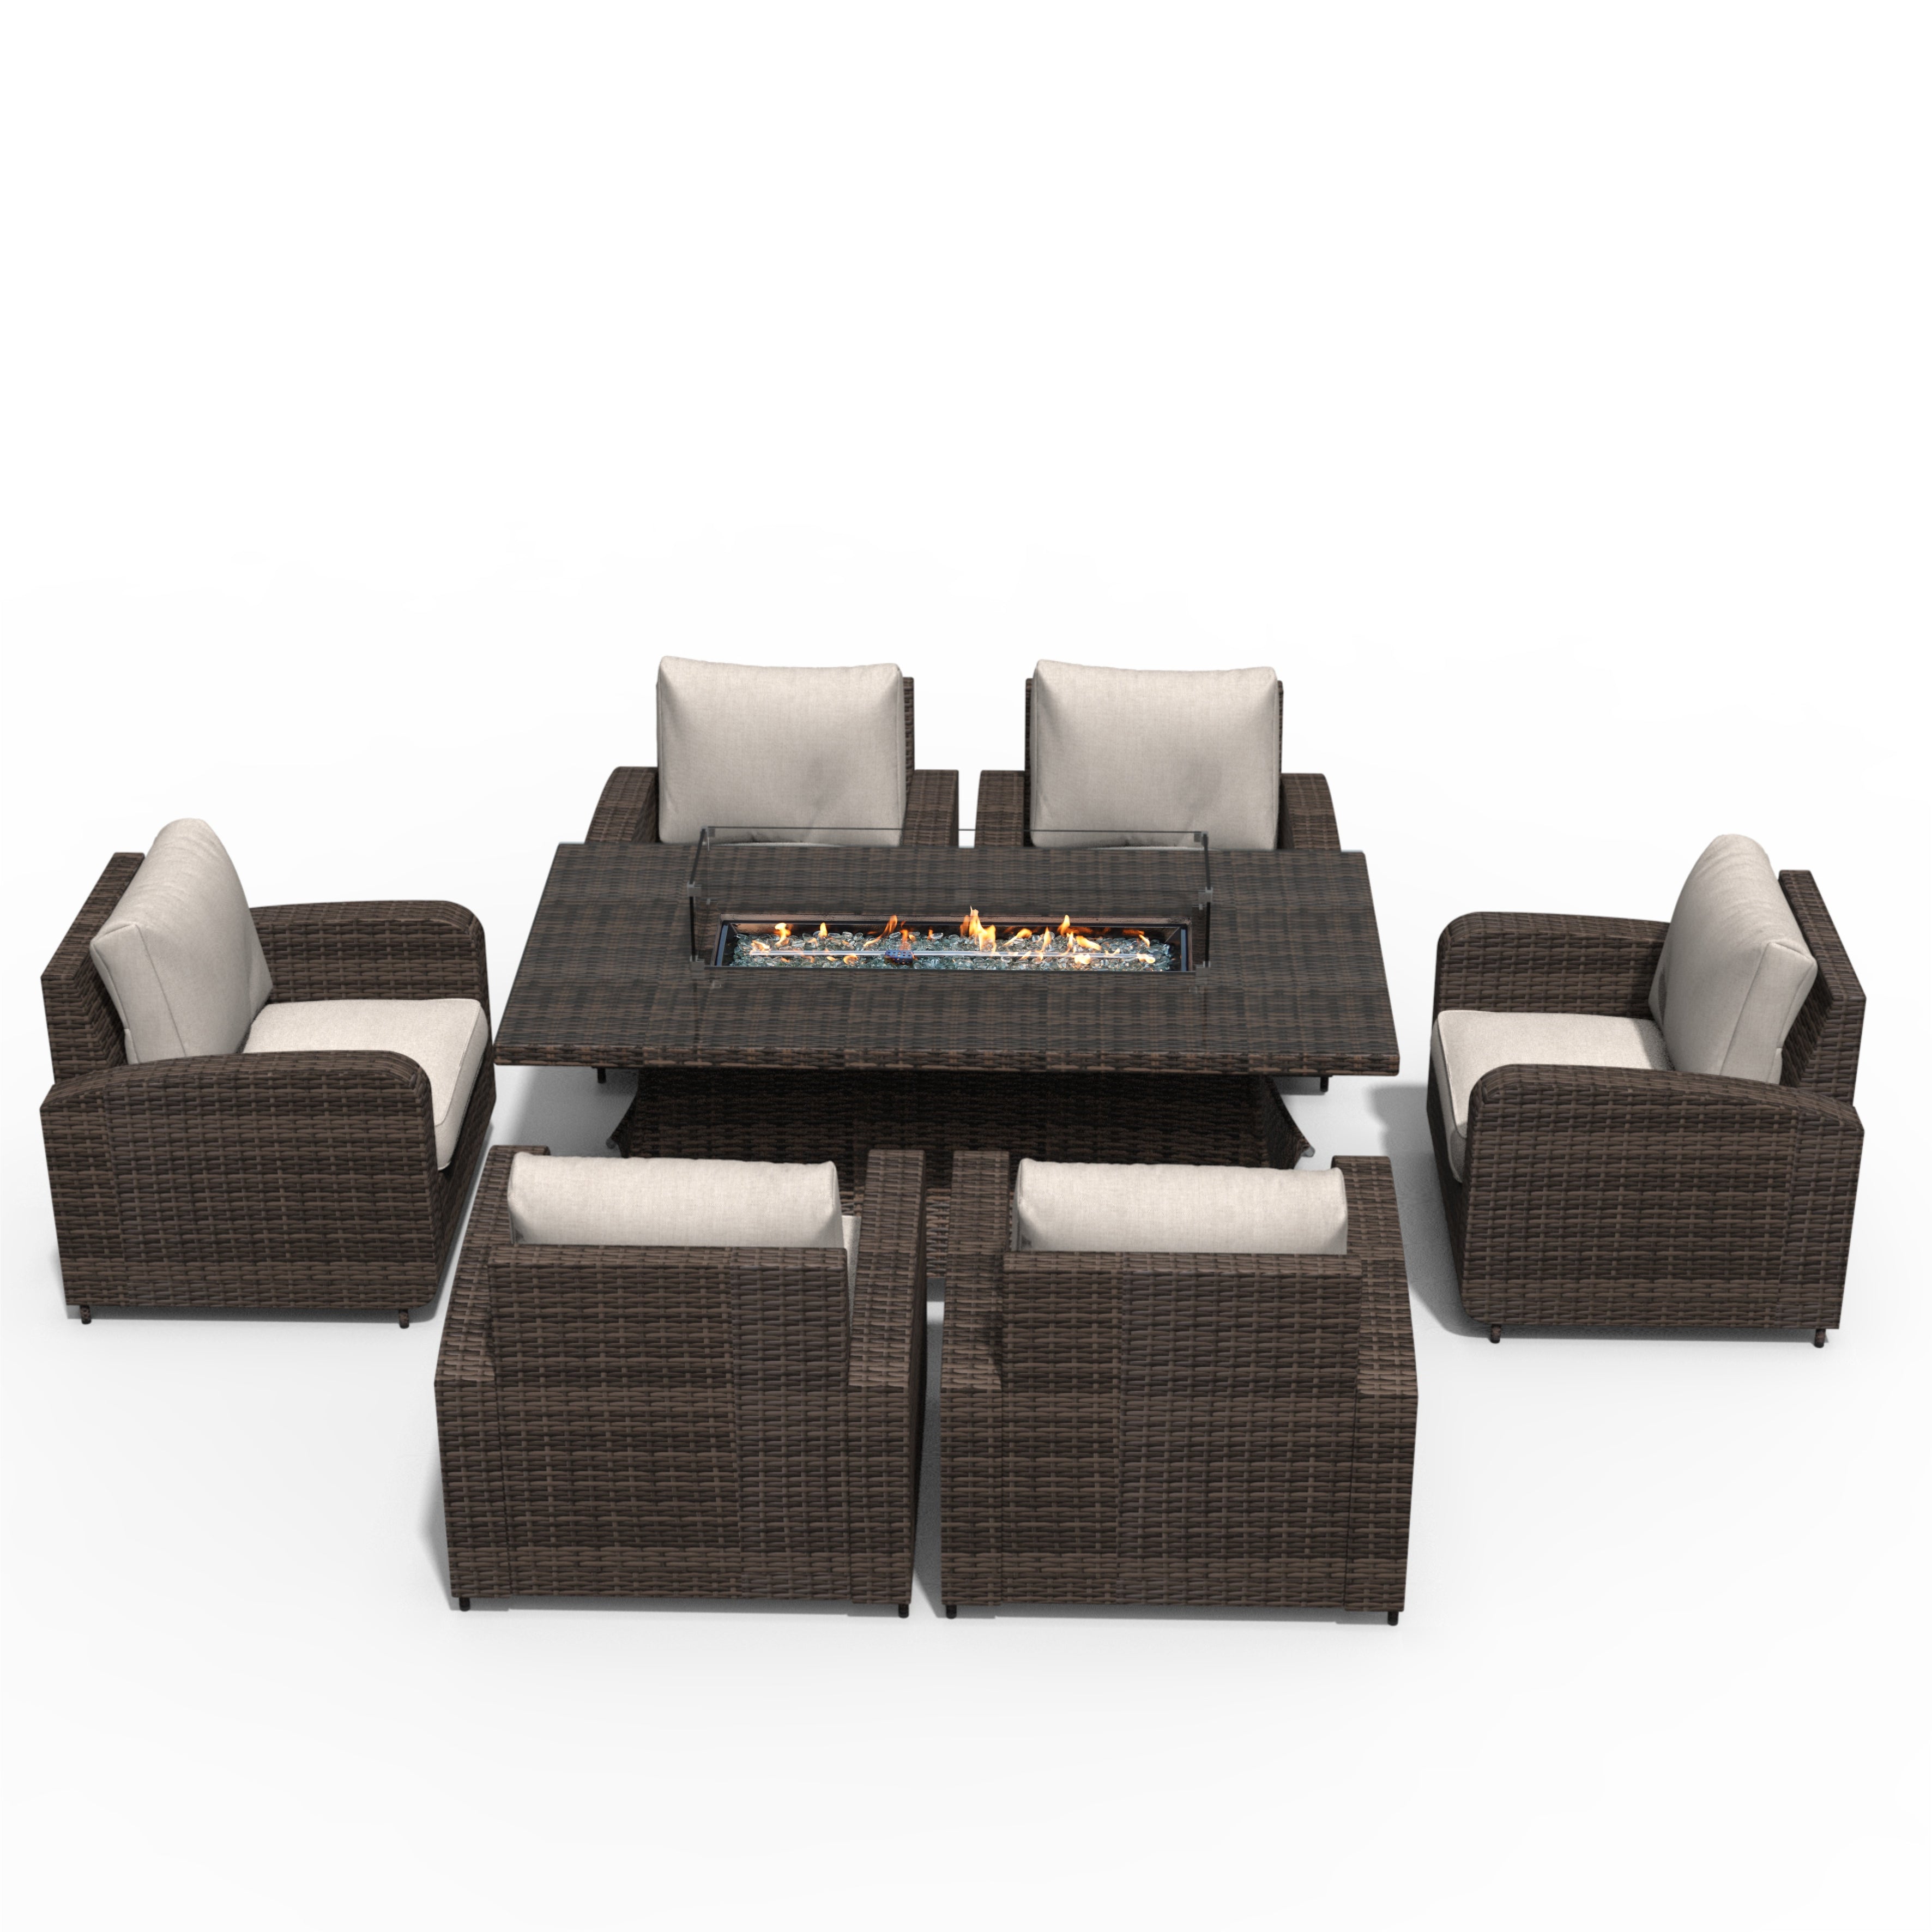 Abrihome 6 Seat Rectangular Fire Pit Dining Sofa Table Set，Grey